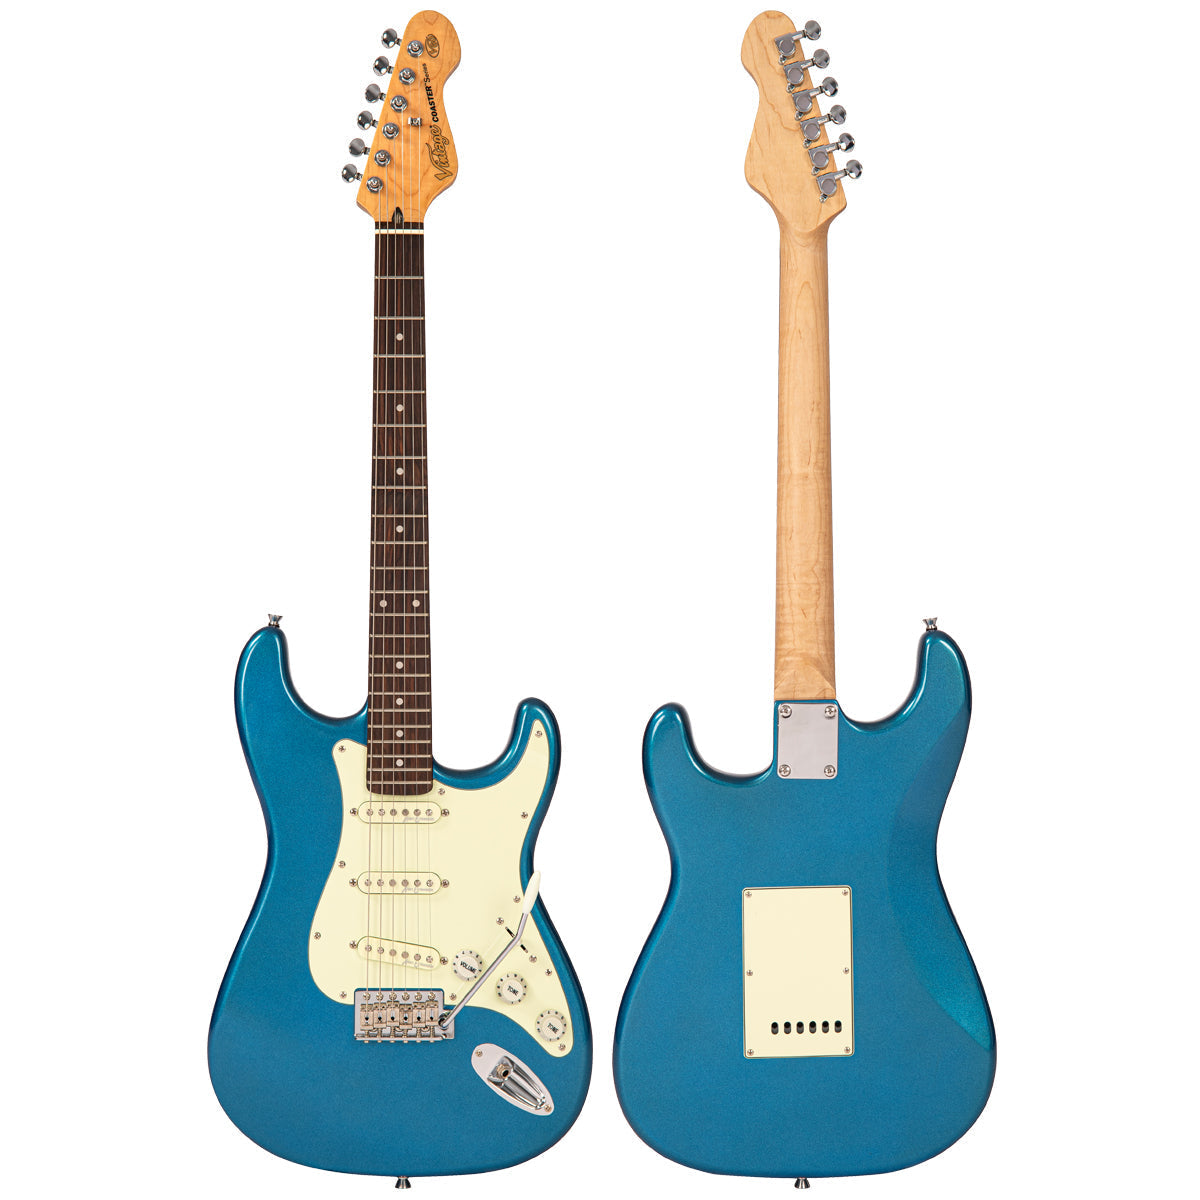 Vintage V60 Coaster Series Electric Guitar ~ Candy Apple Blue, Electric Guitar for sale at Richards Guitars.